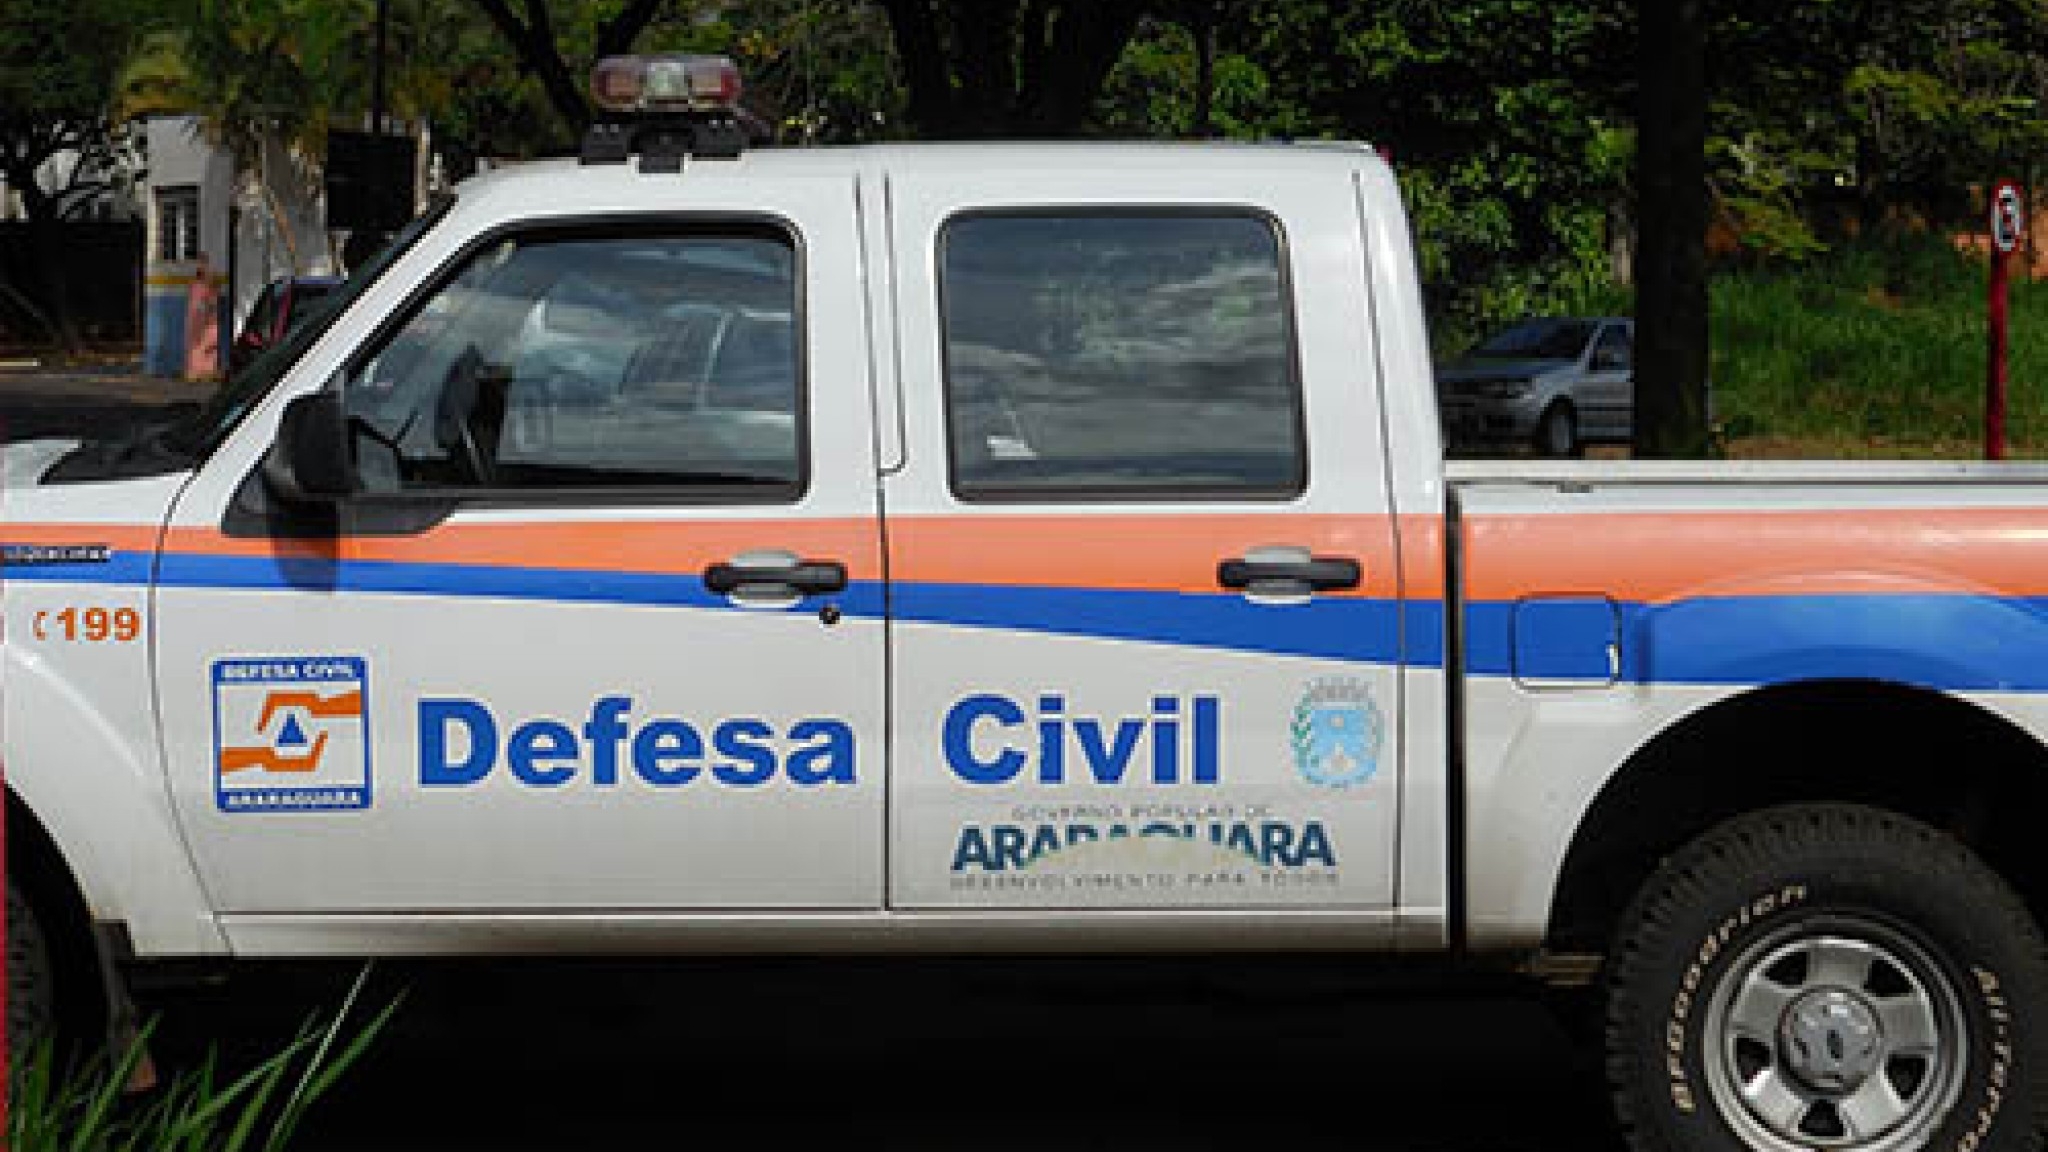 Defesa Civil reforça alerta sobre altas temperaturas Portal Morada Notícias de Araraquara e